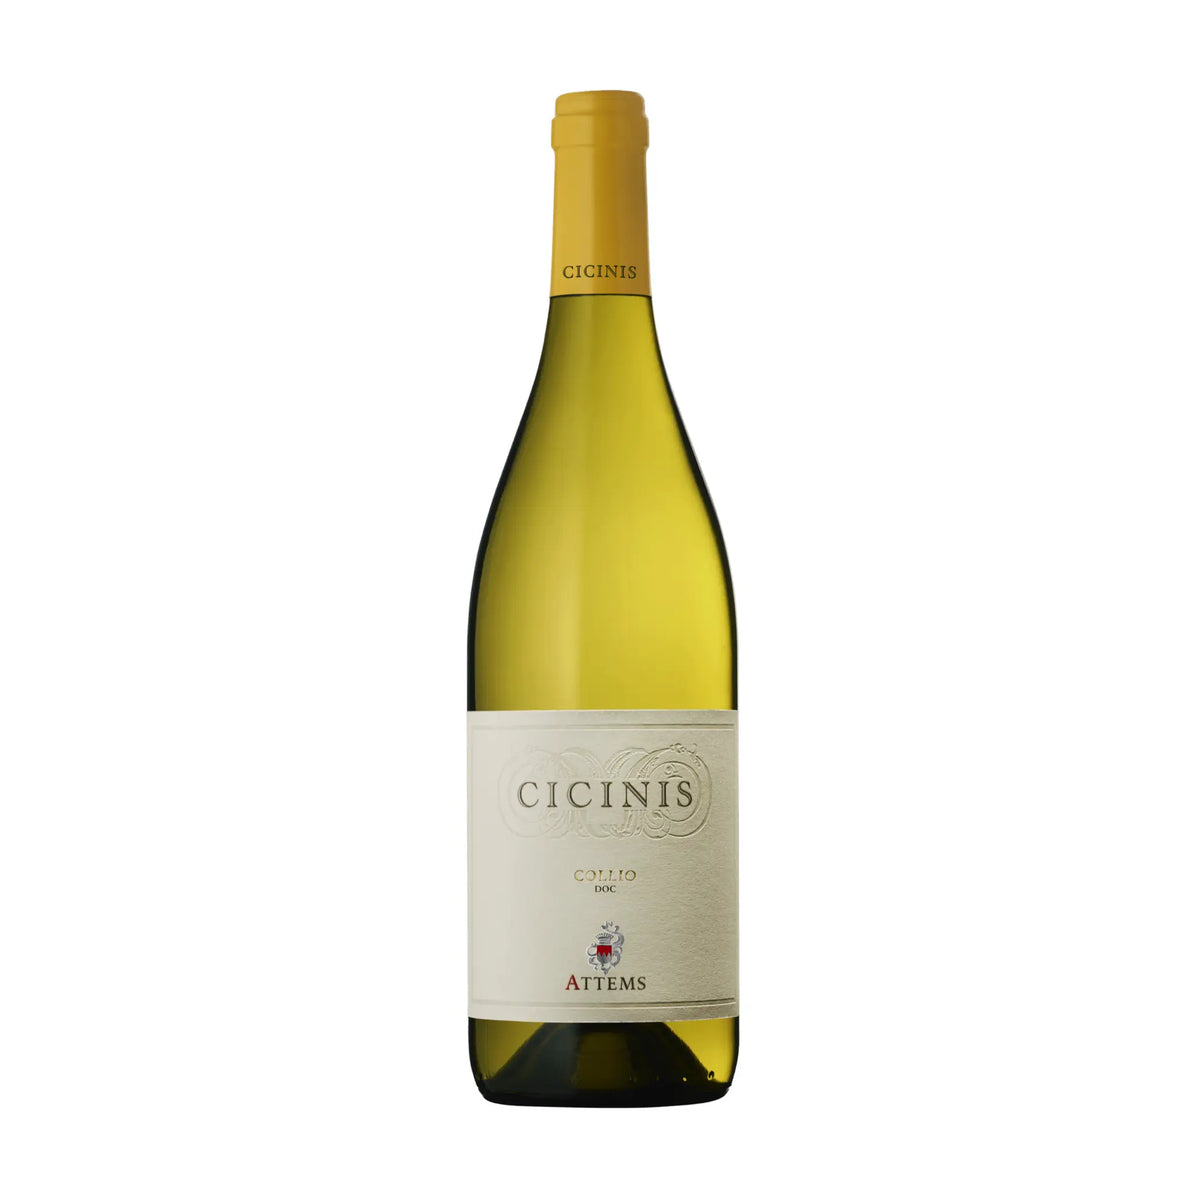 Frescobaldi-Weißwein-Sauvignon Blanc-Friaul-Italien-Attems Cicinis Sauvignon Blanc Collio DOC-WINECOM